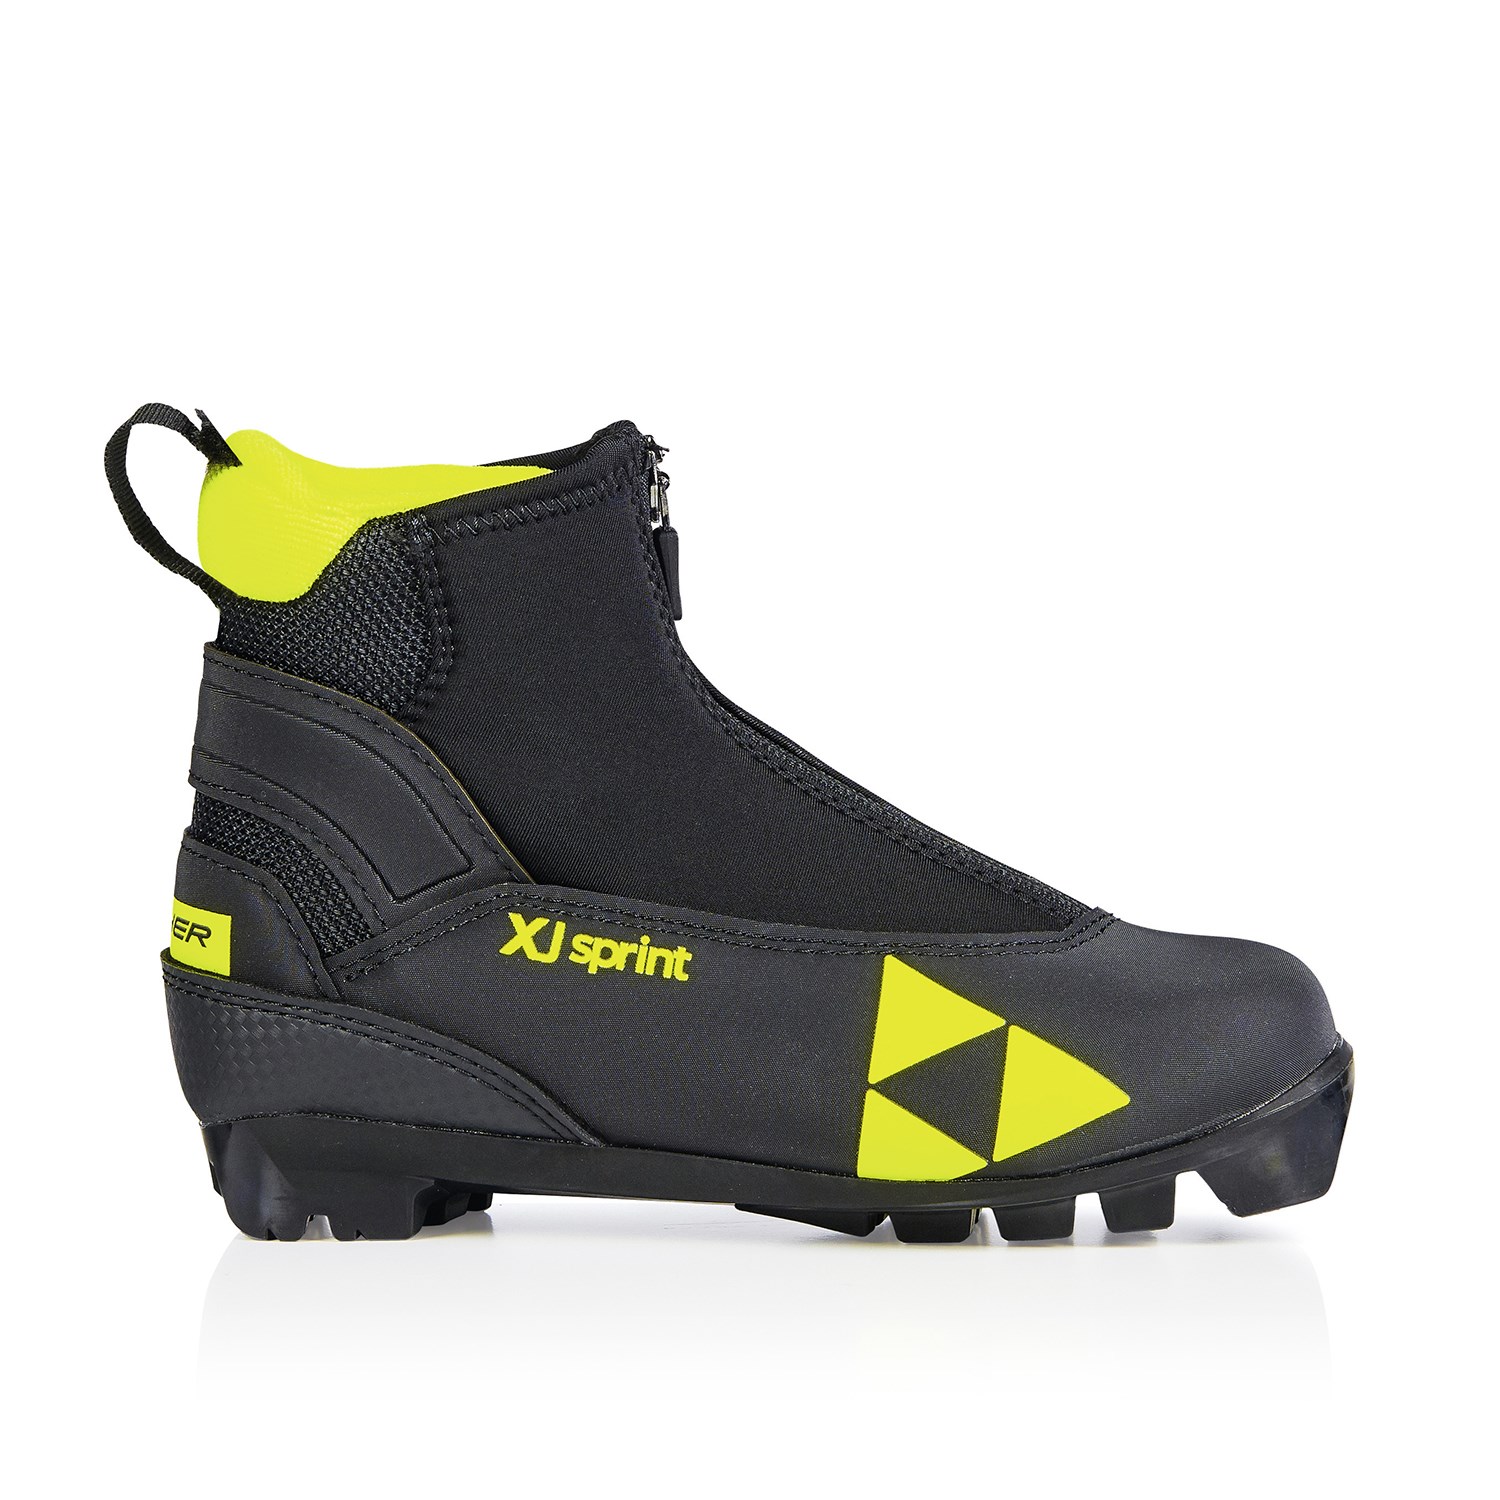 Спринт цена. Лыжные ботинки Fischer XJ Sprint. Fischer ботинки лыжные желтые. Ботинки Фишер soml f6000 год выпуска. Ботинки Fischer Race Promo.